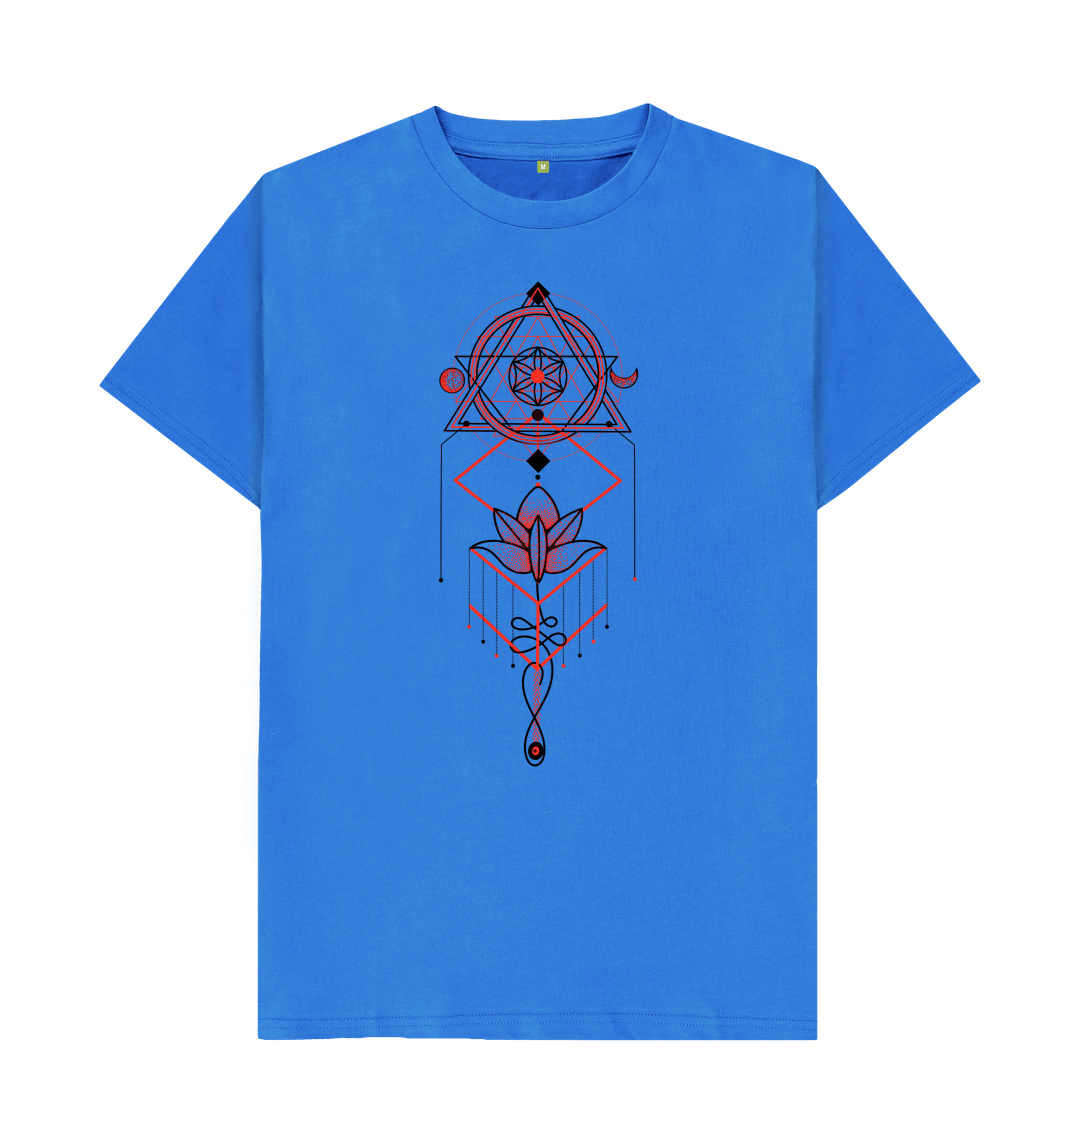 The blue lotus  Sacred Geometry